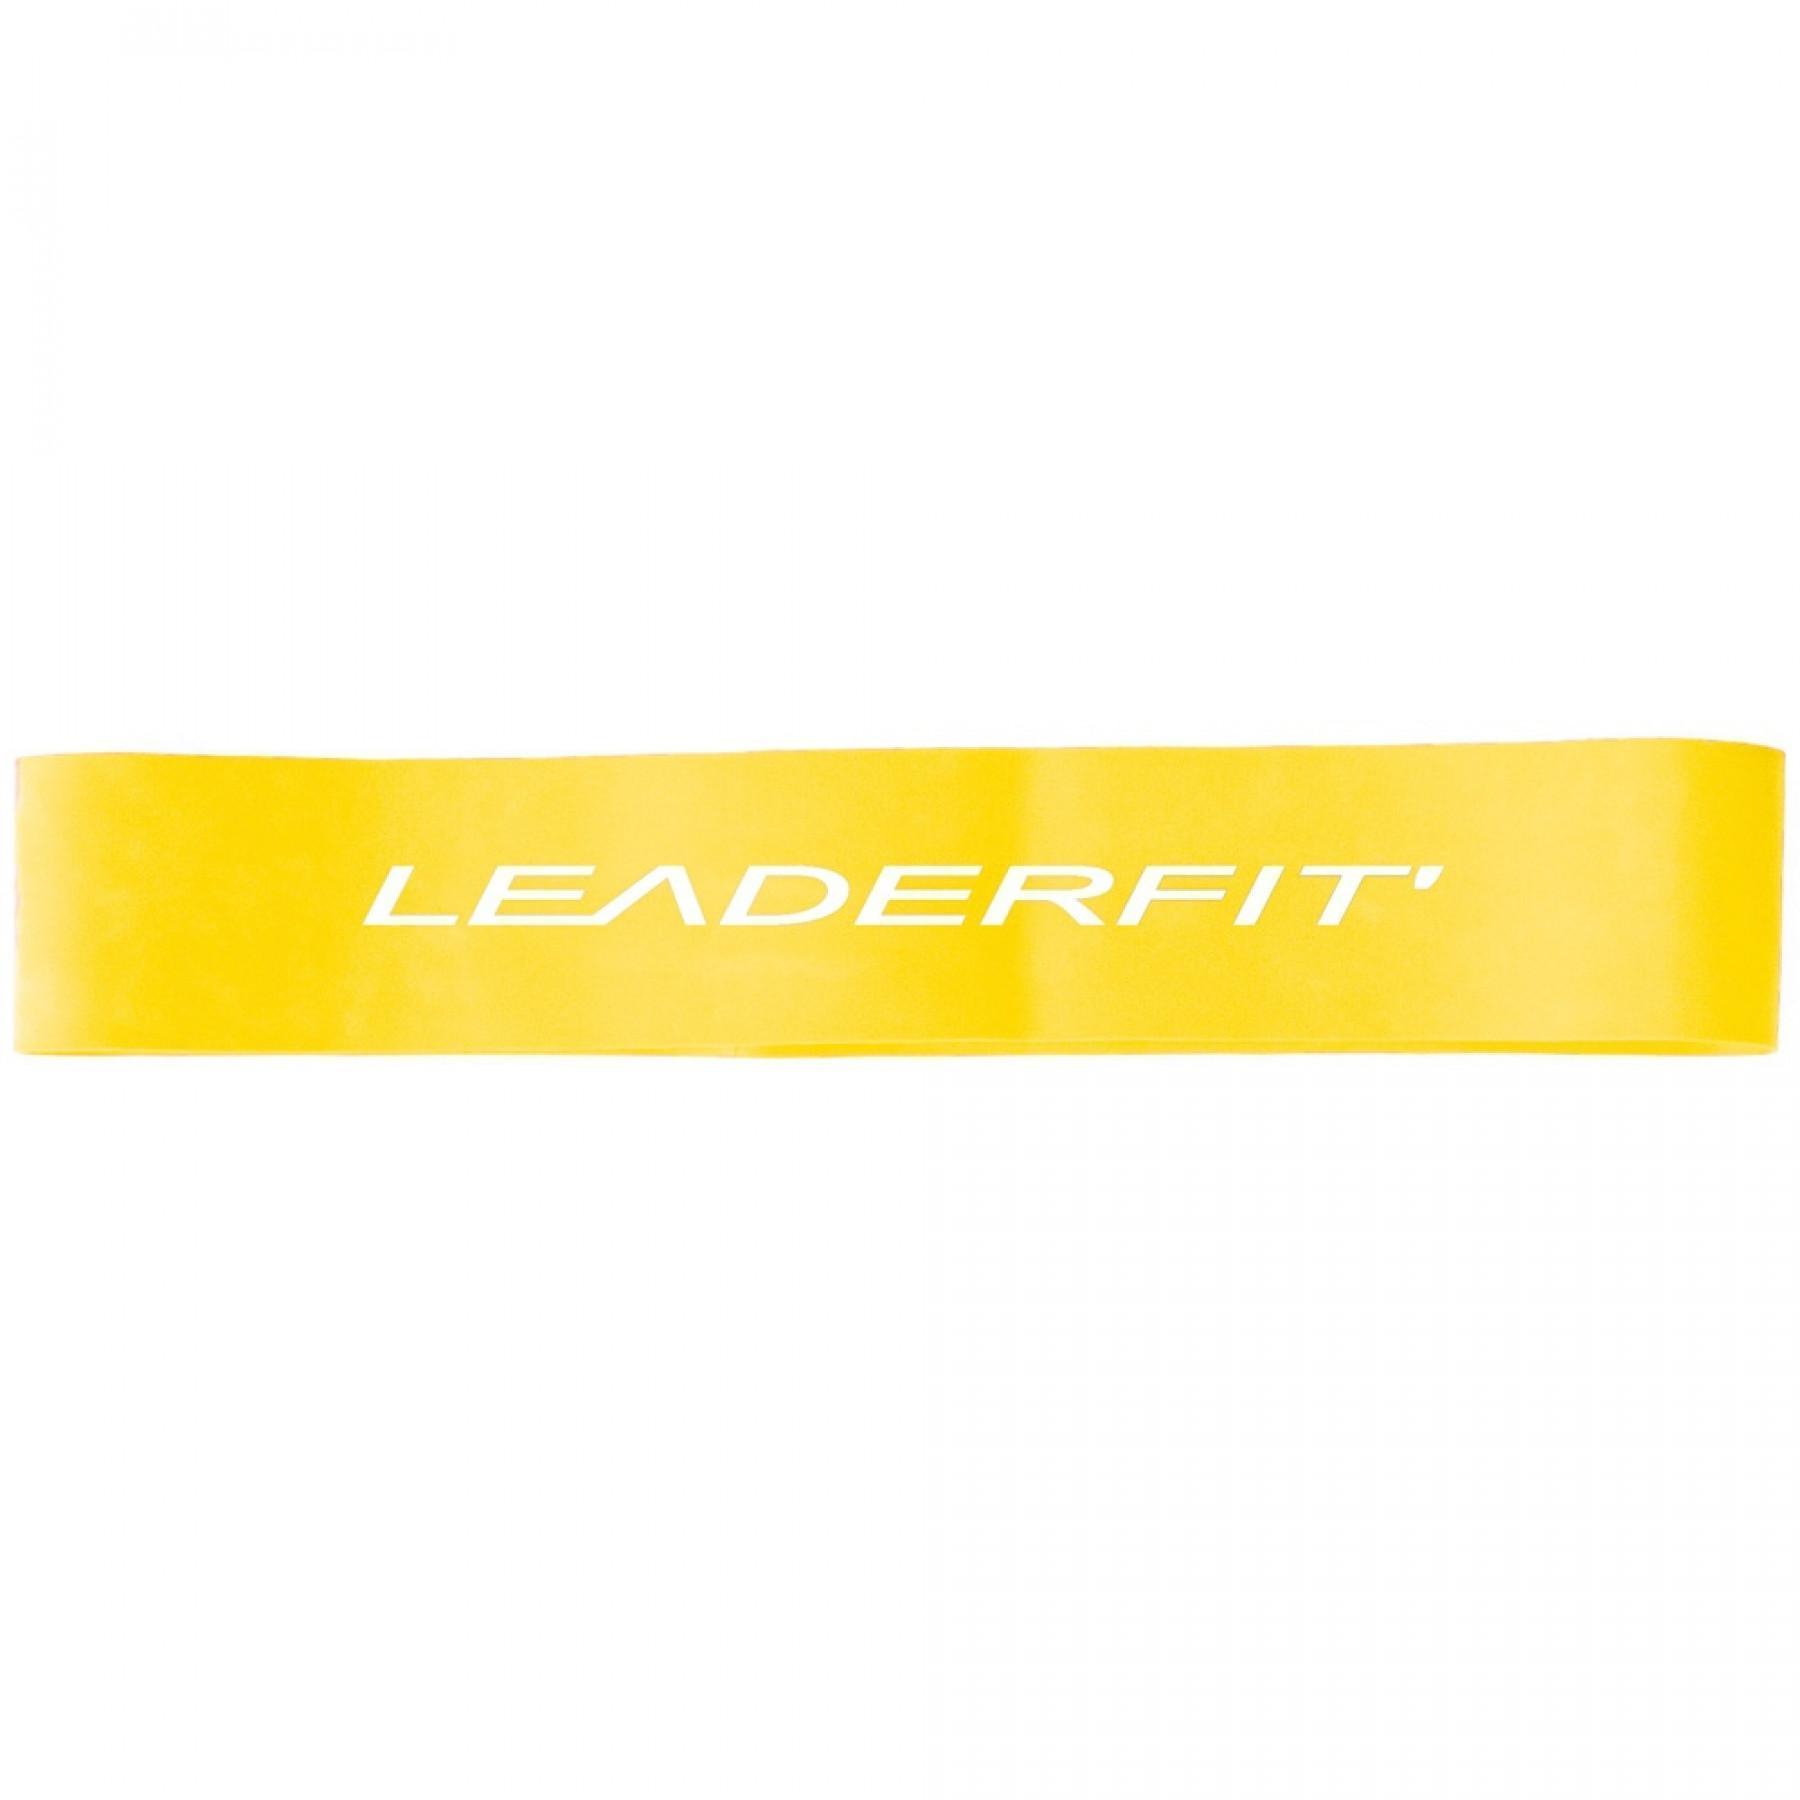 Mini-banda Leader Fit light